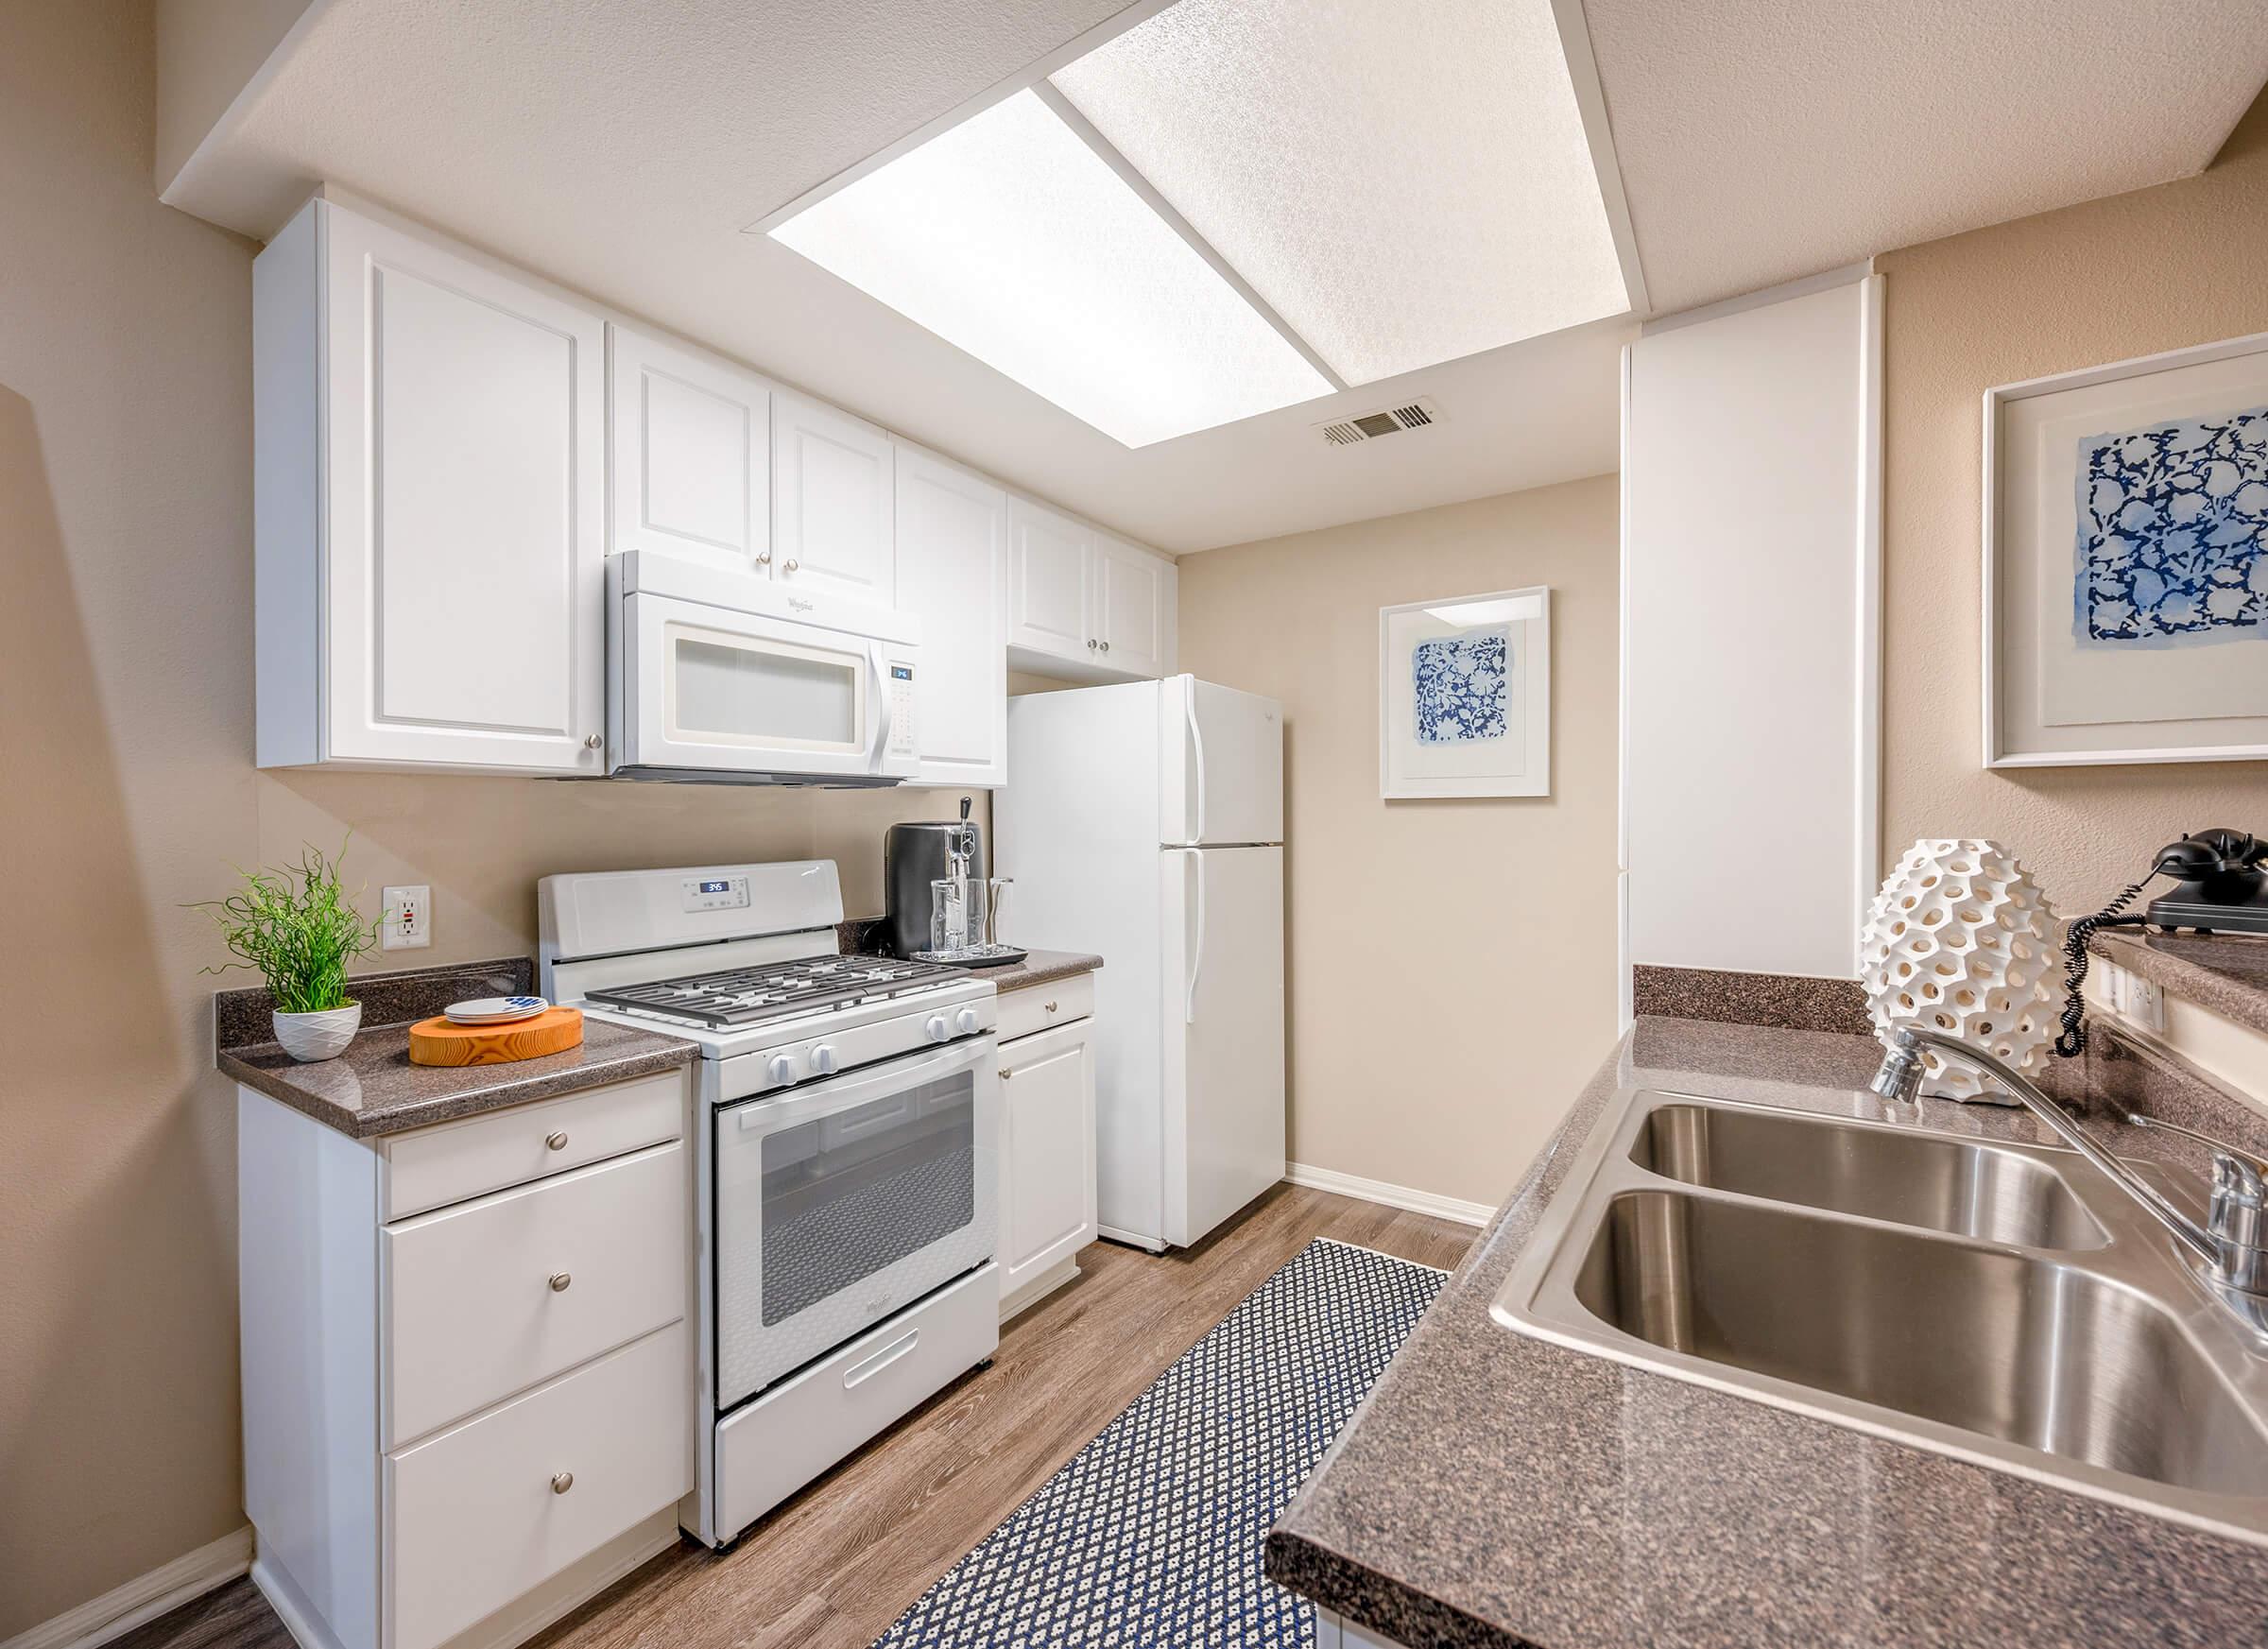 Laurel Terrace Apartment Homes provides custom white cabinetry